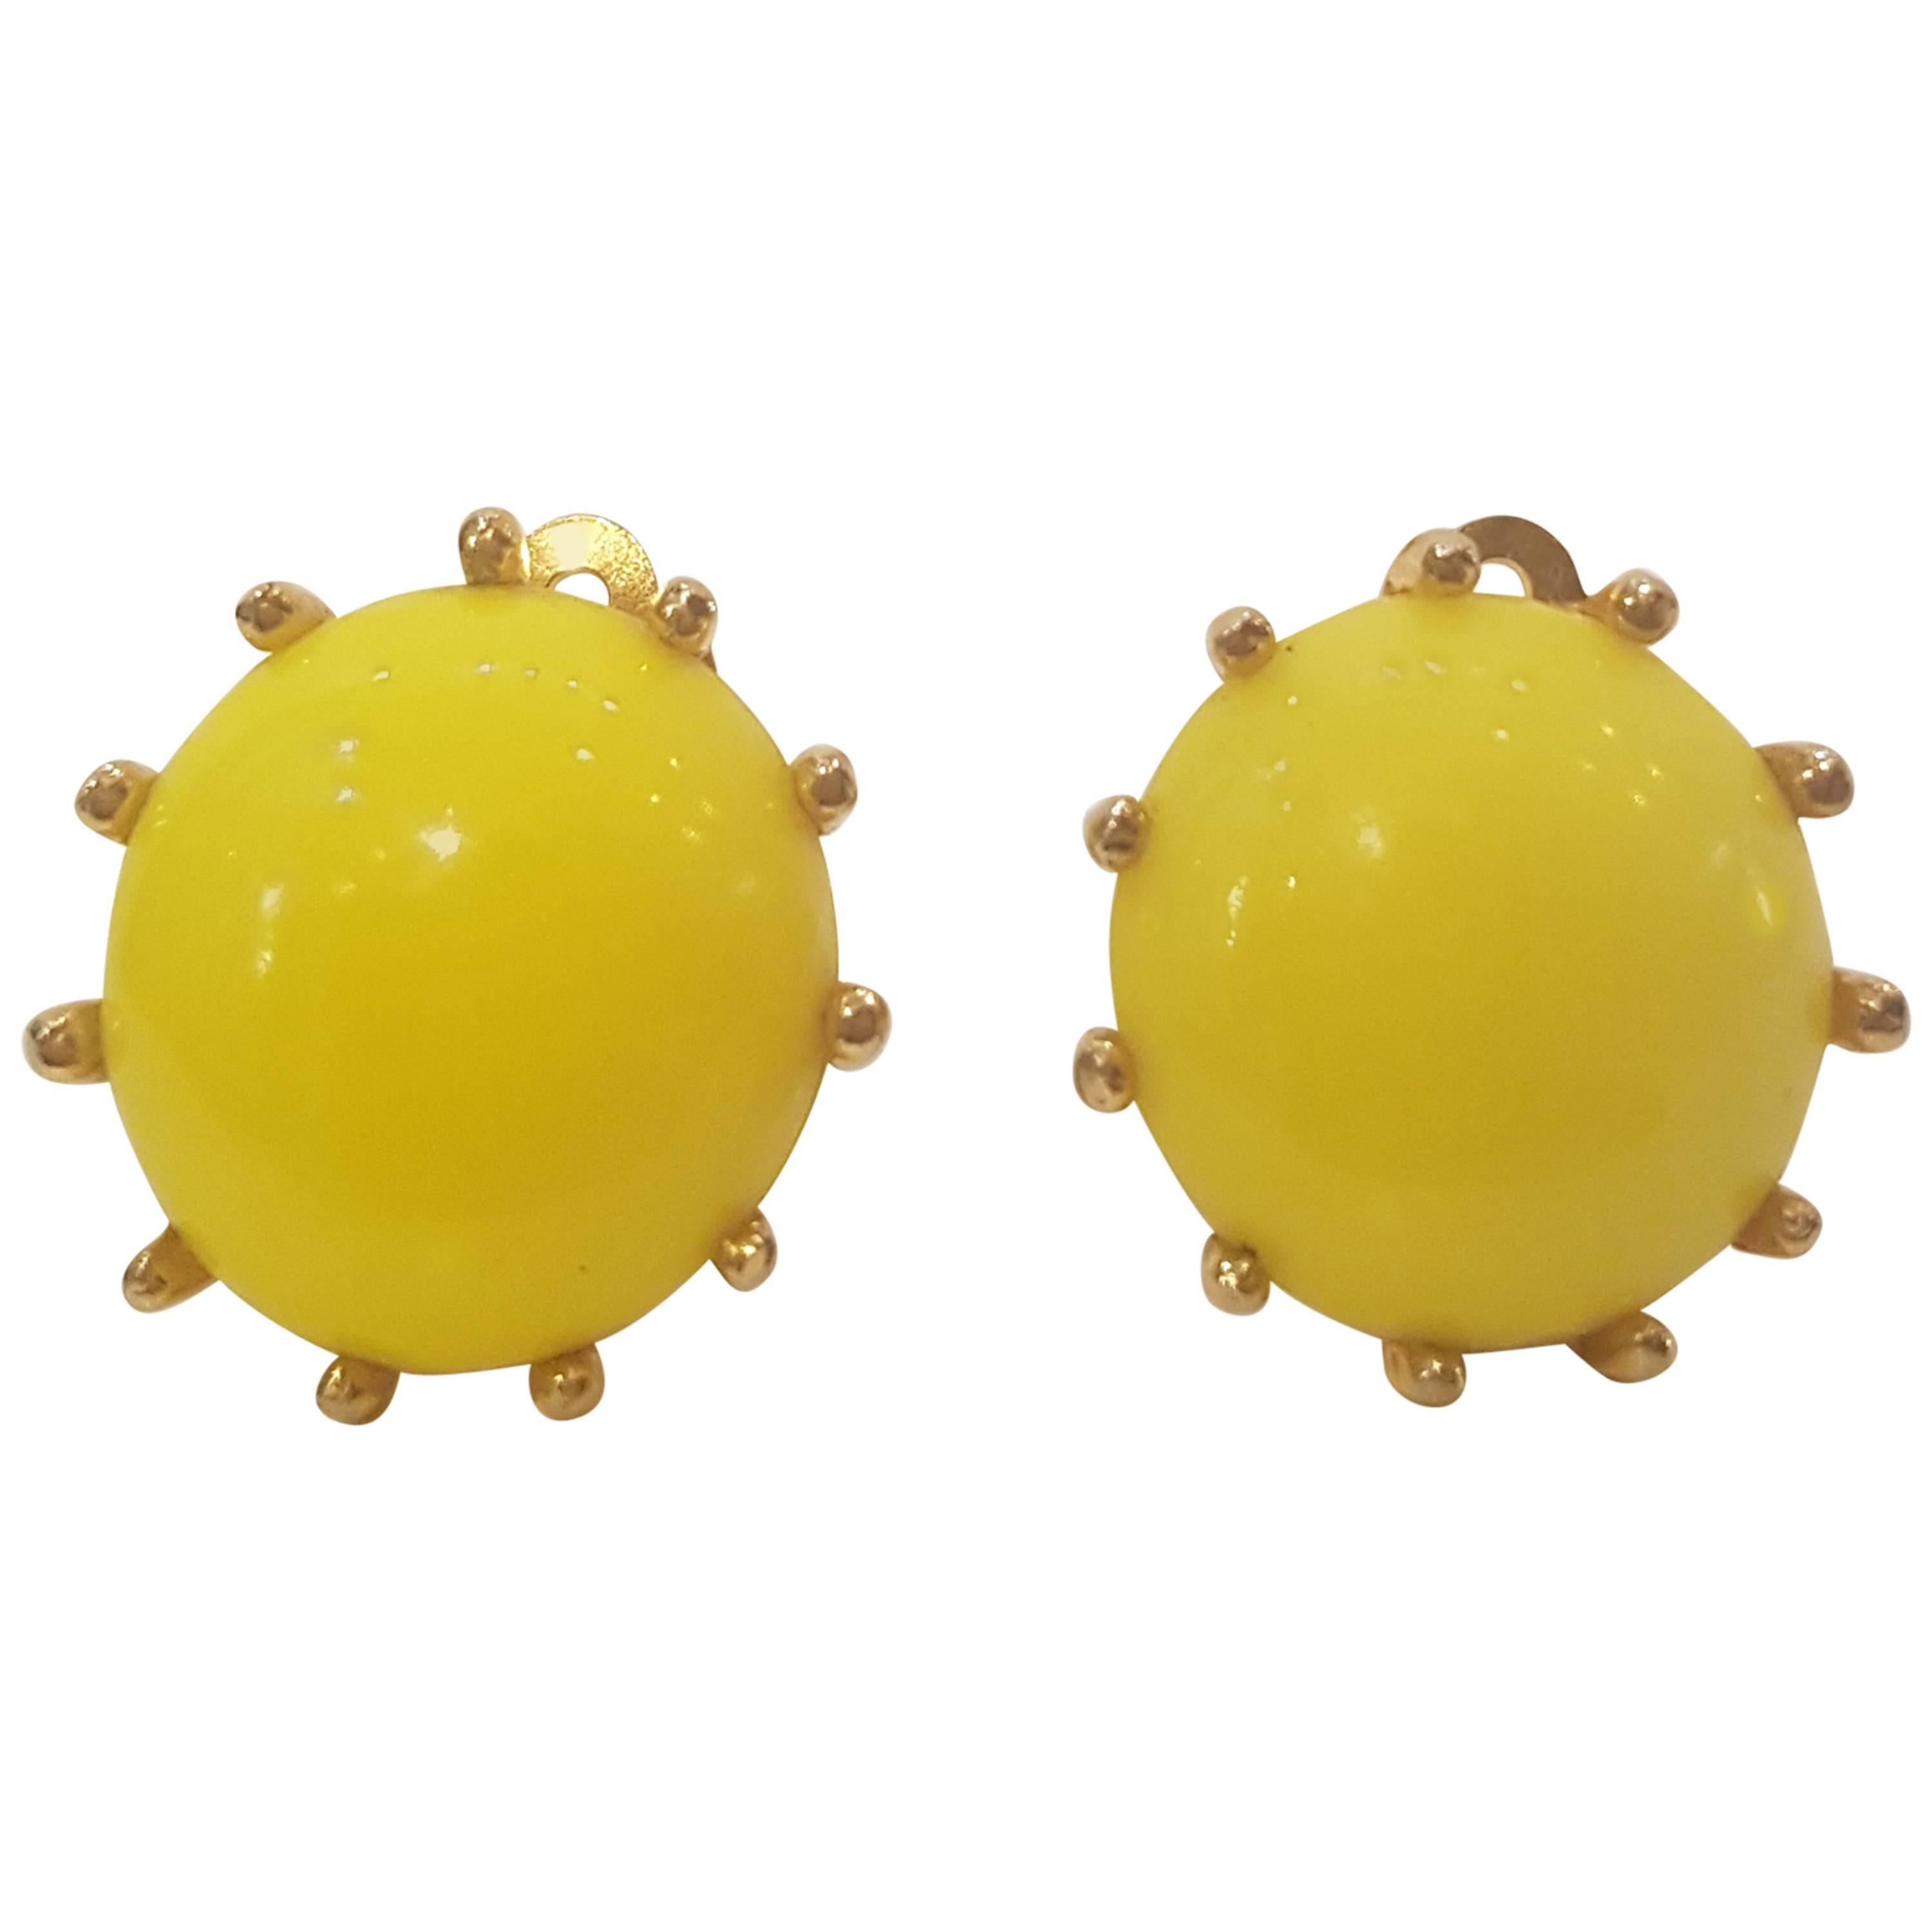 1980s Elsa Schiaparelli yellow clip-on earrings